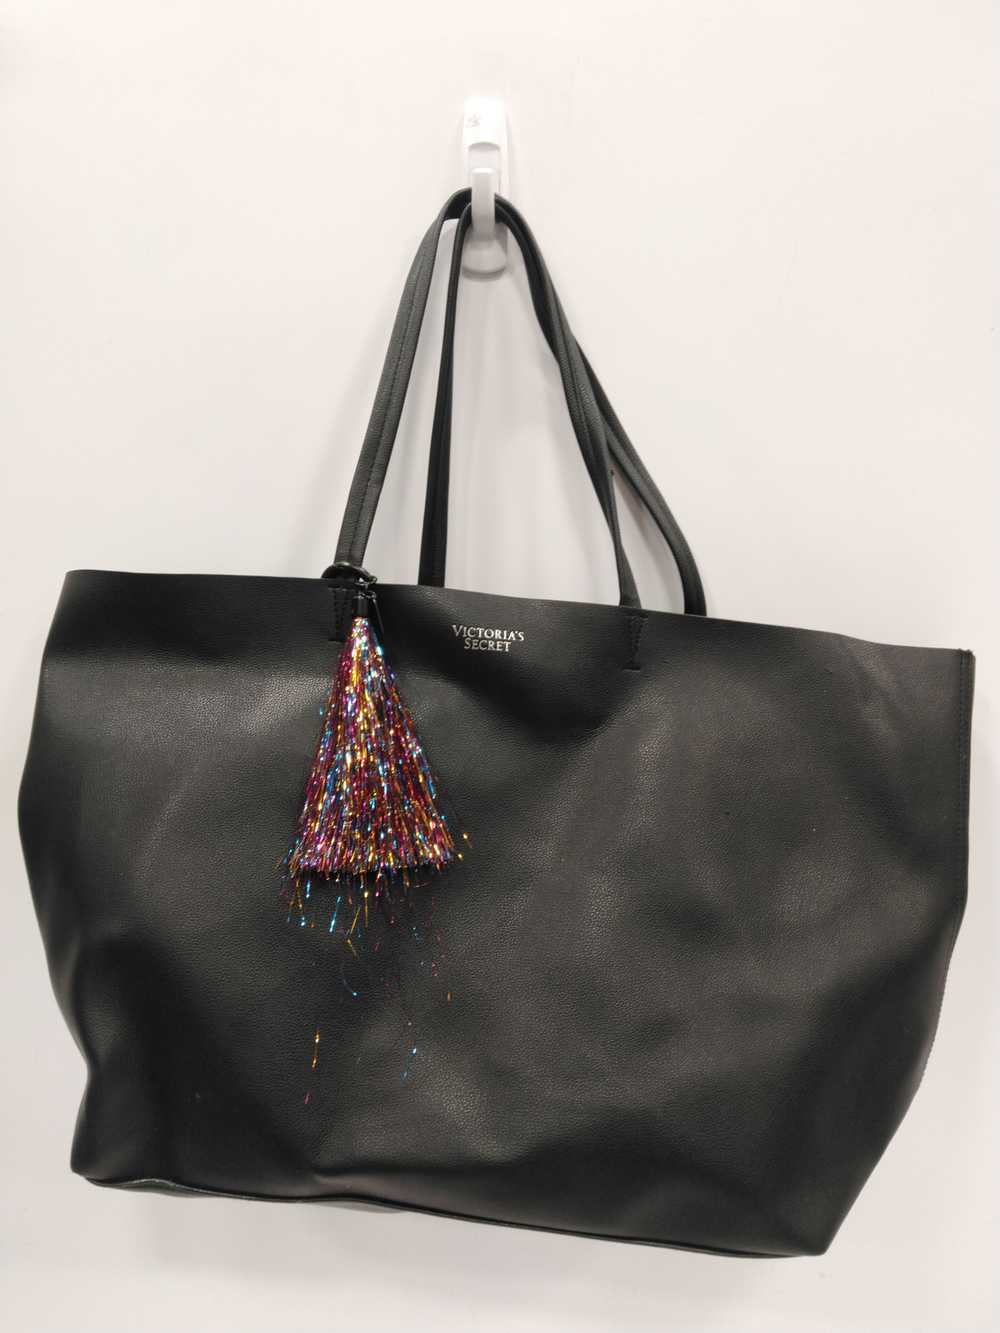 Bundle Of 4 Victoria Secret Tote Bags - image 2